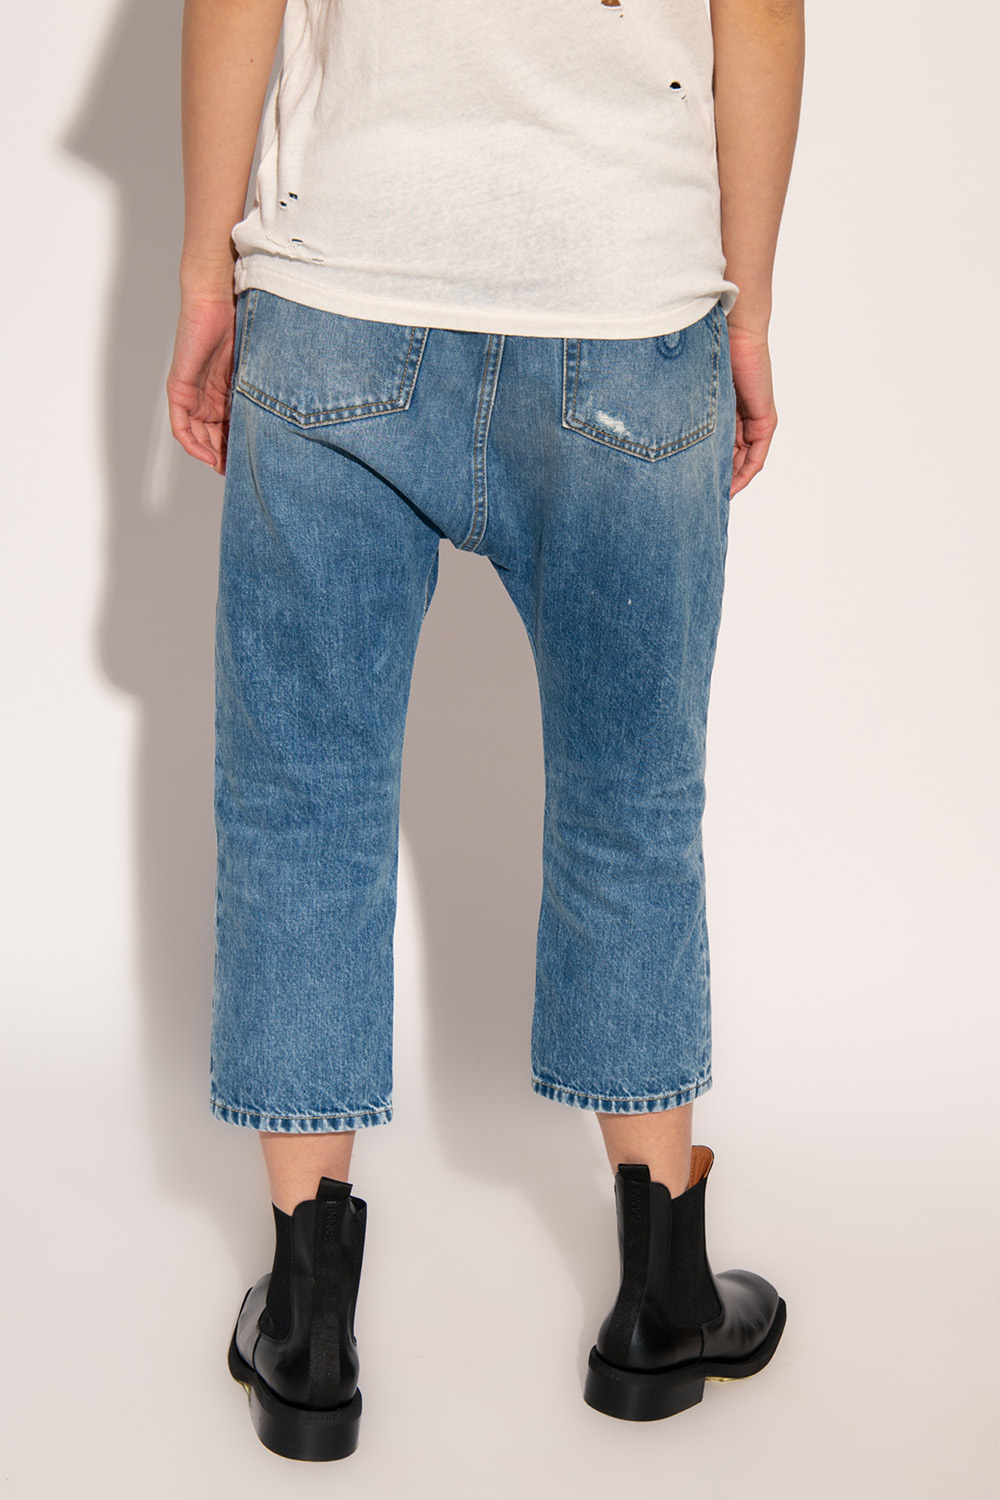 R13 Organic Cotton Slim Fit Mom Jeans